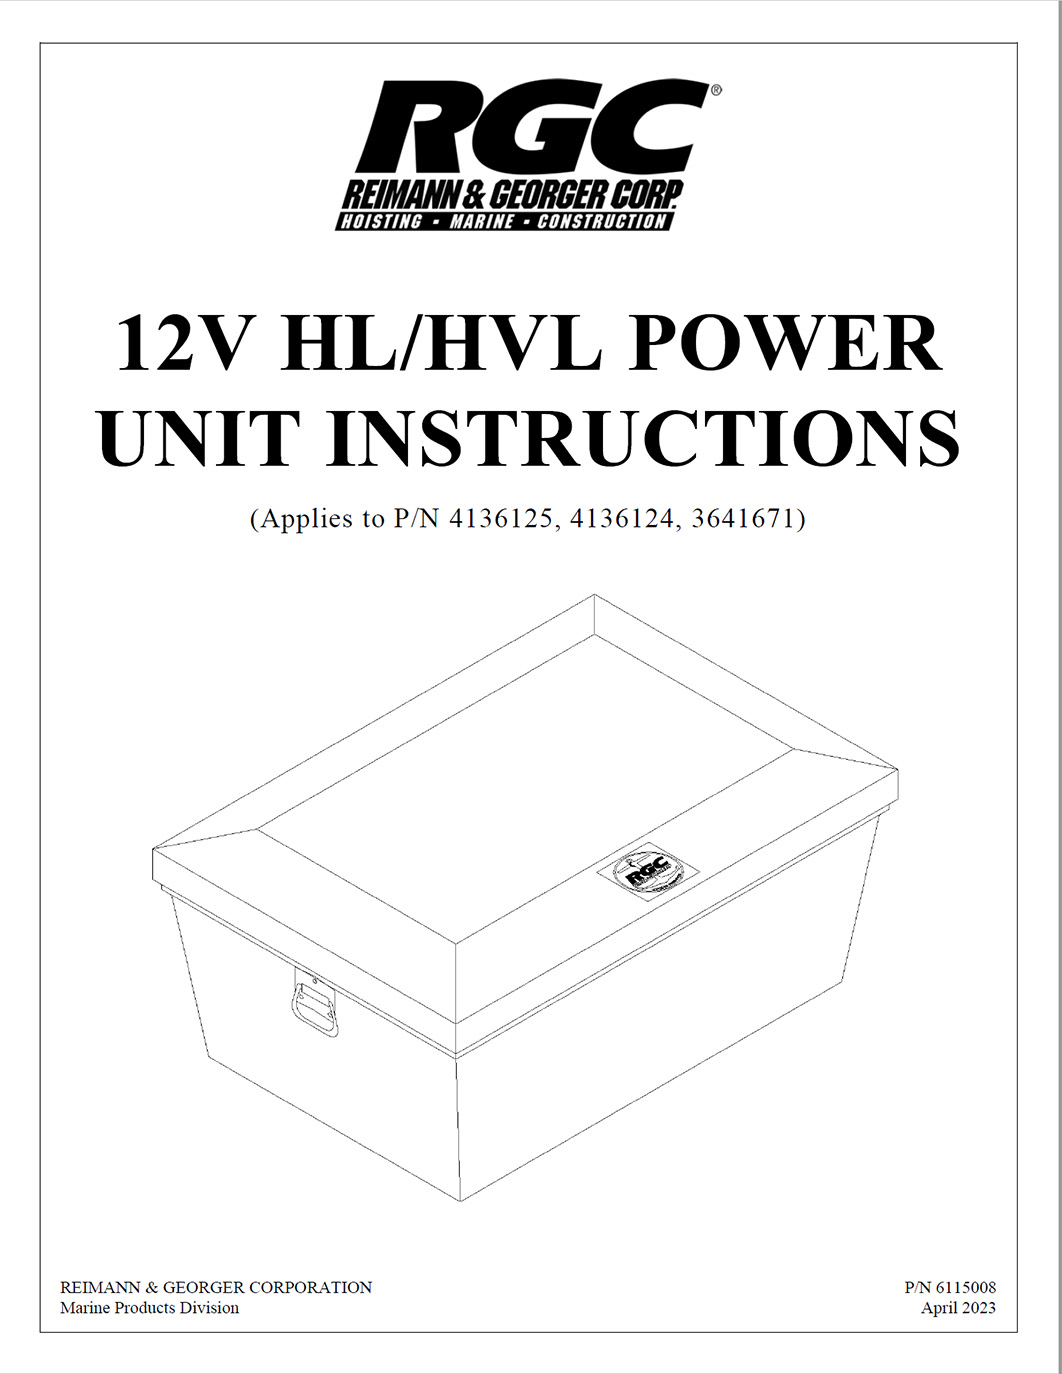 12V HL/HVL Power Unit Instructions